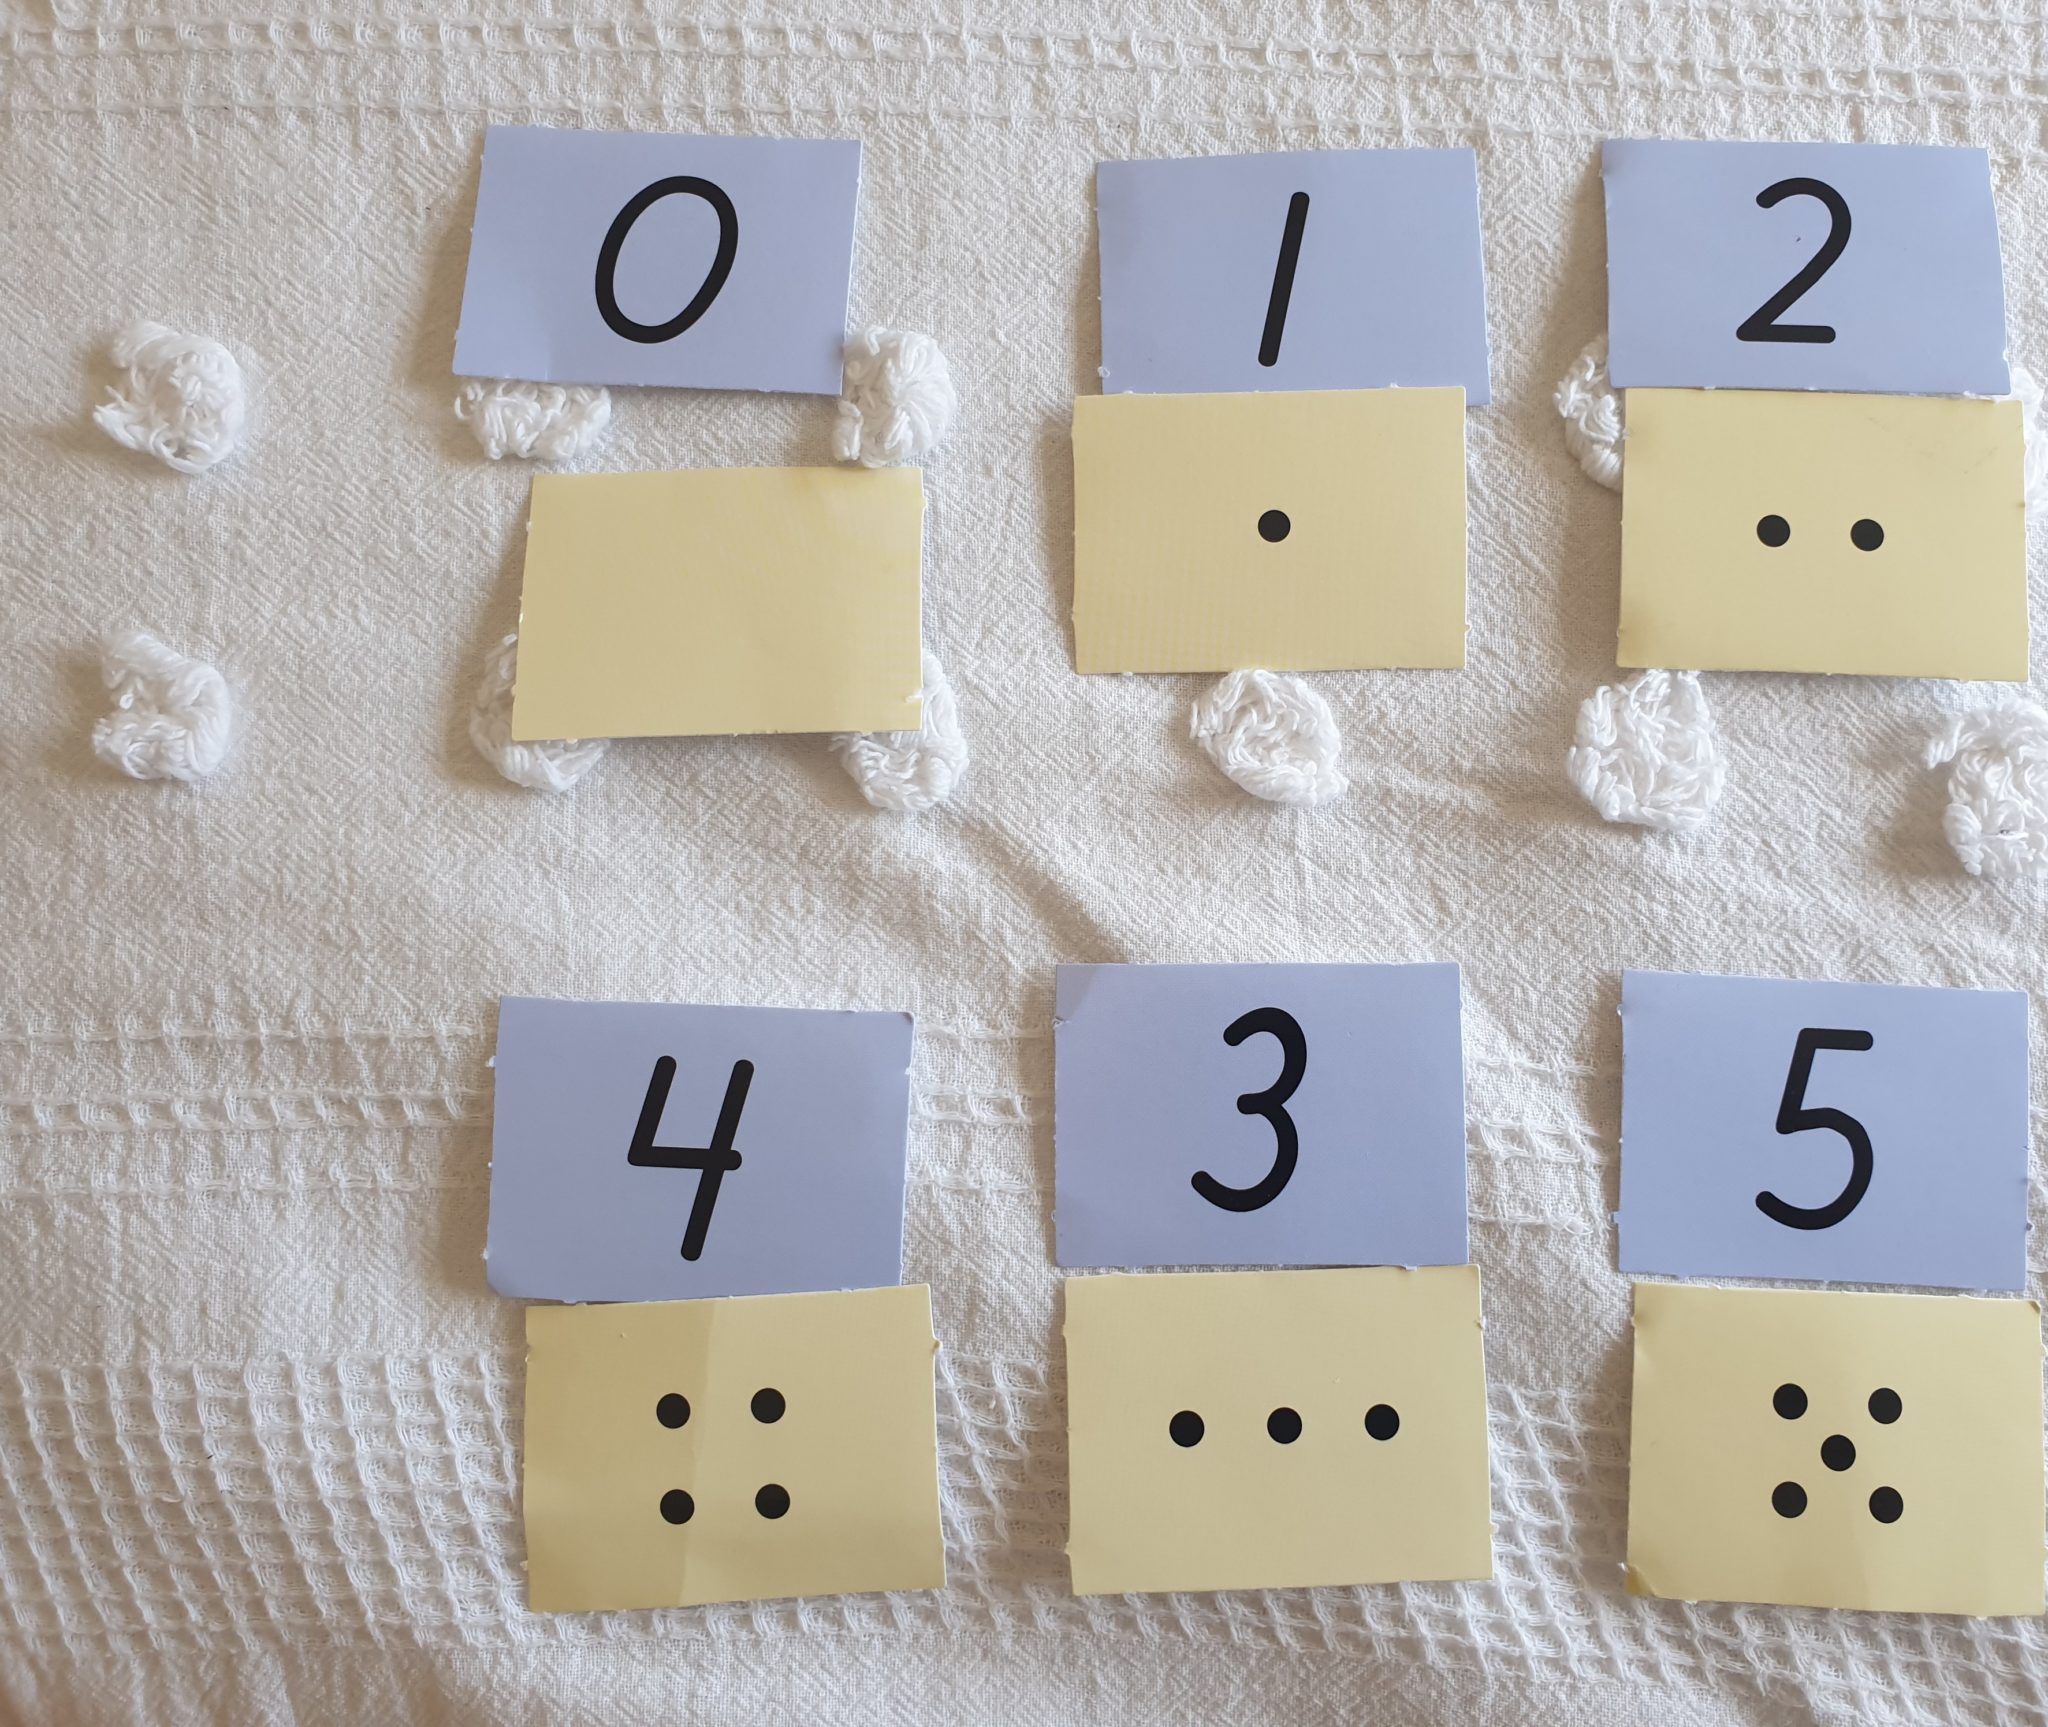 BJU Press Online Math Student Manipulatives Packet dot cards and number cards.